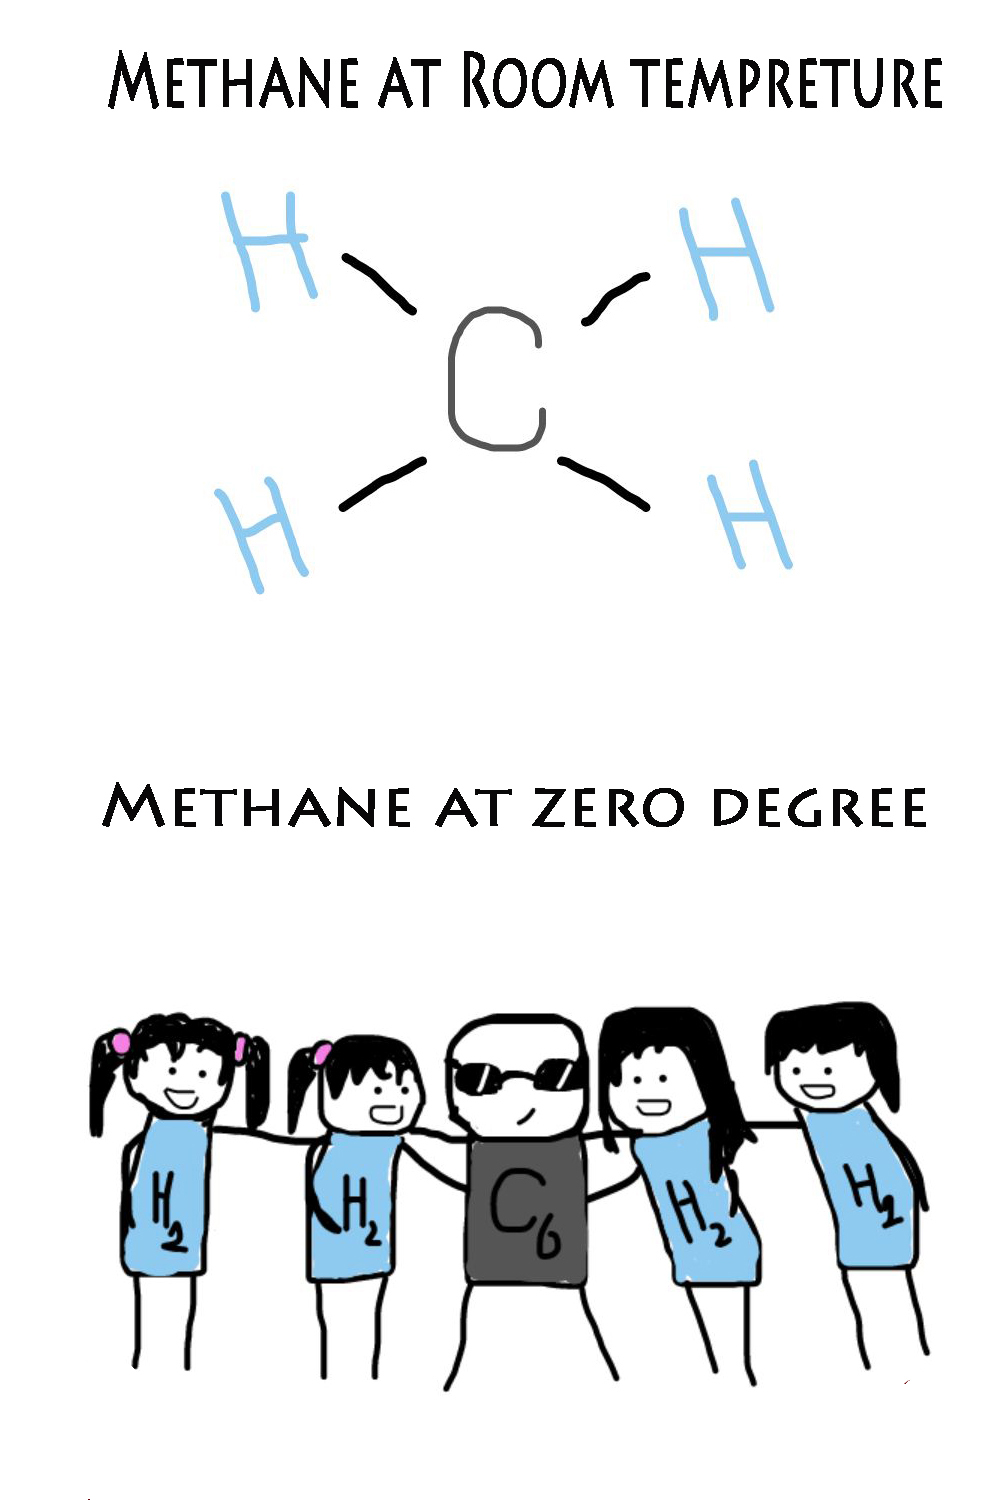 "Cool" Methane.